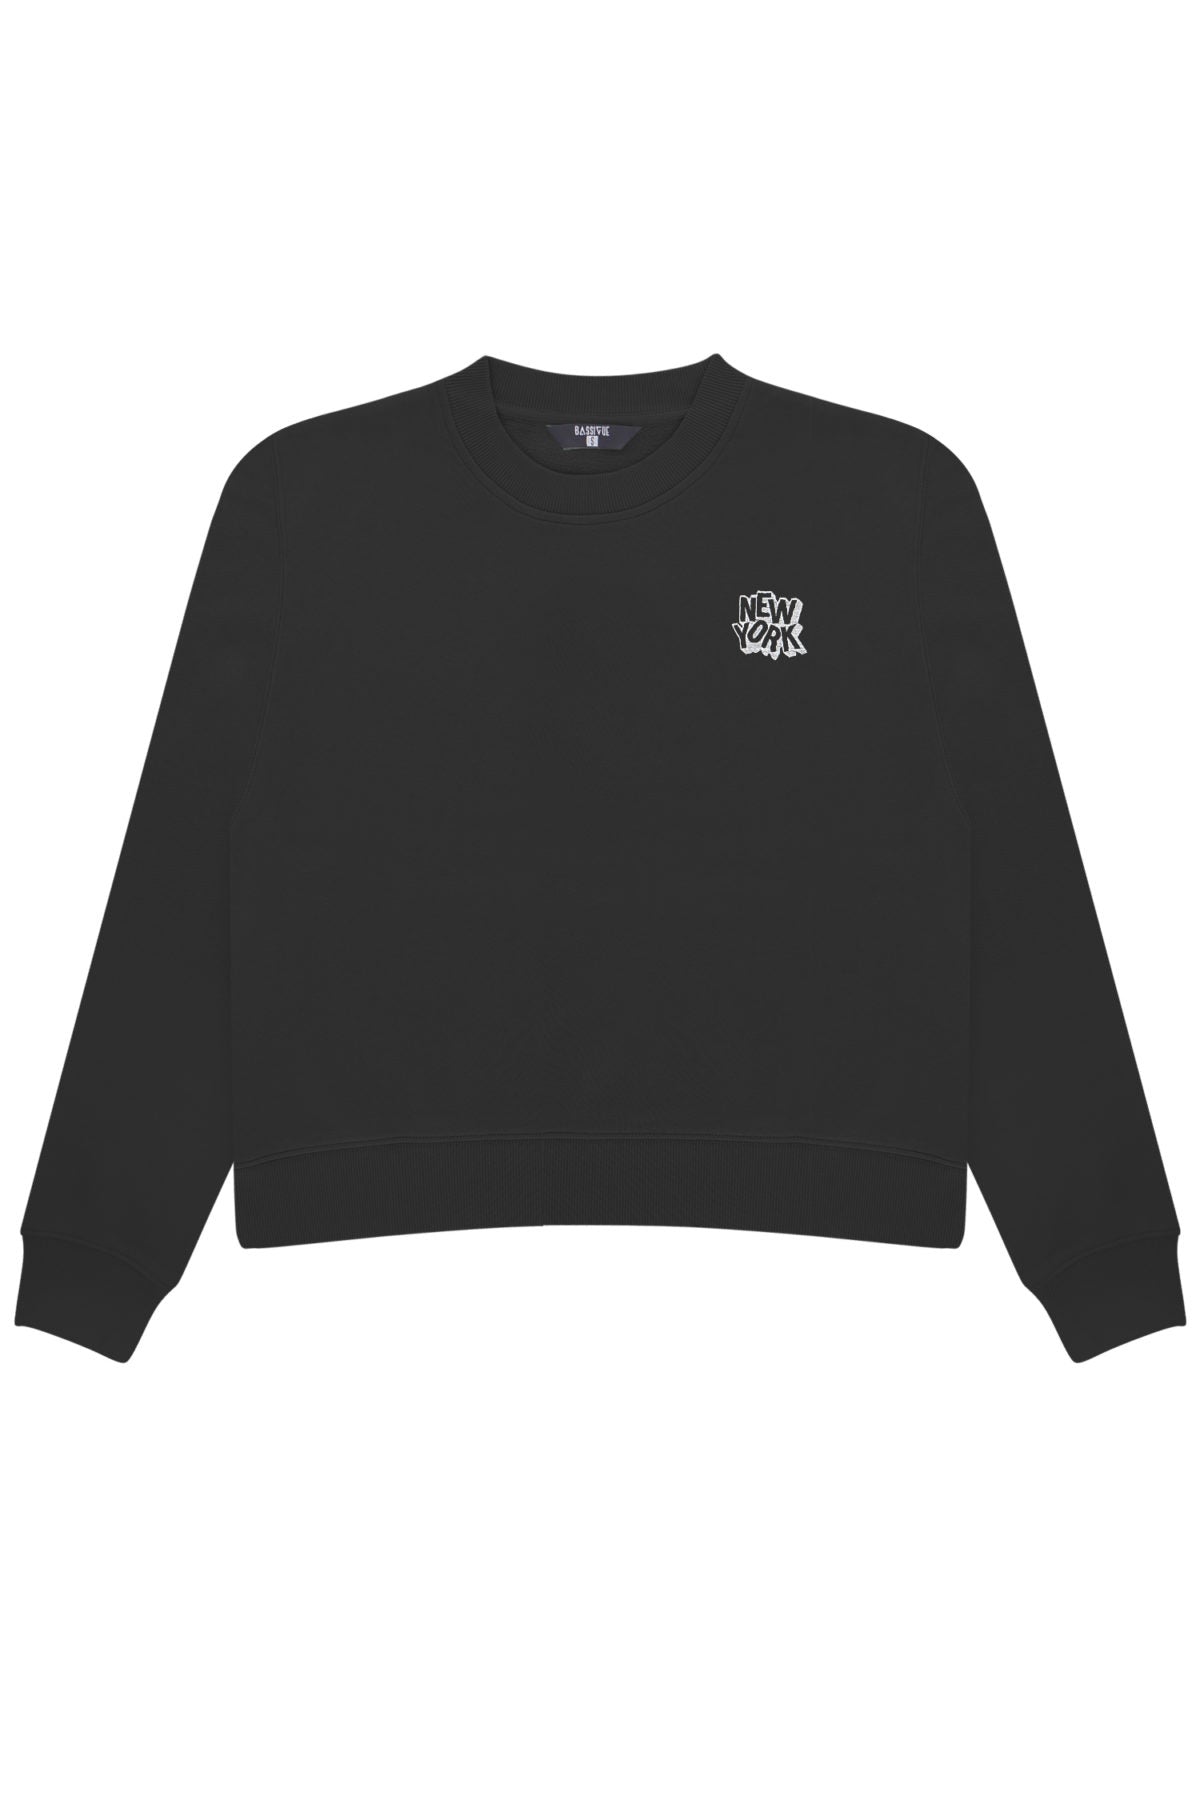 Cotton Crewneck Sweatshirt - New York